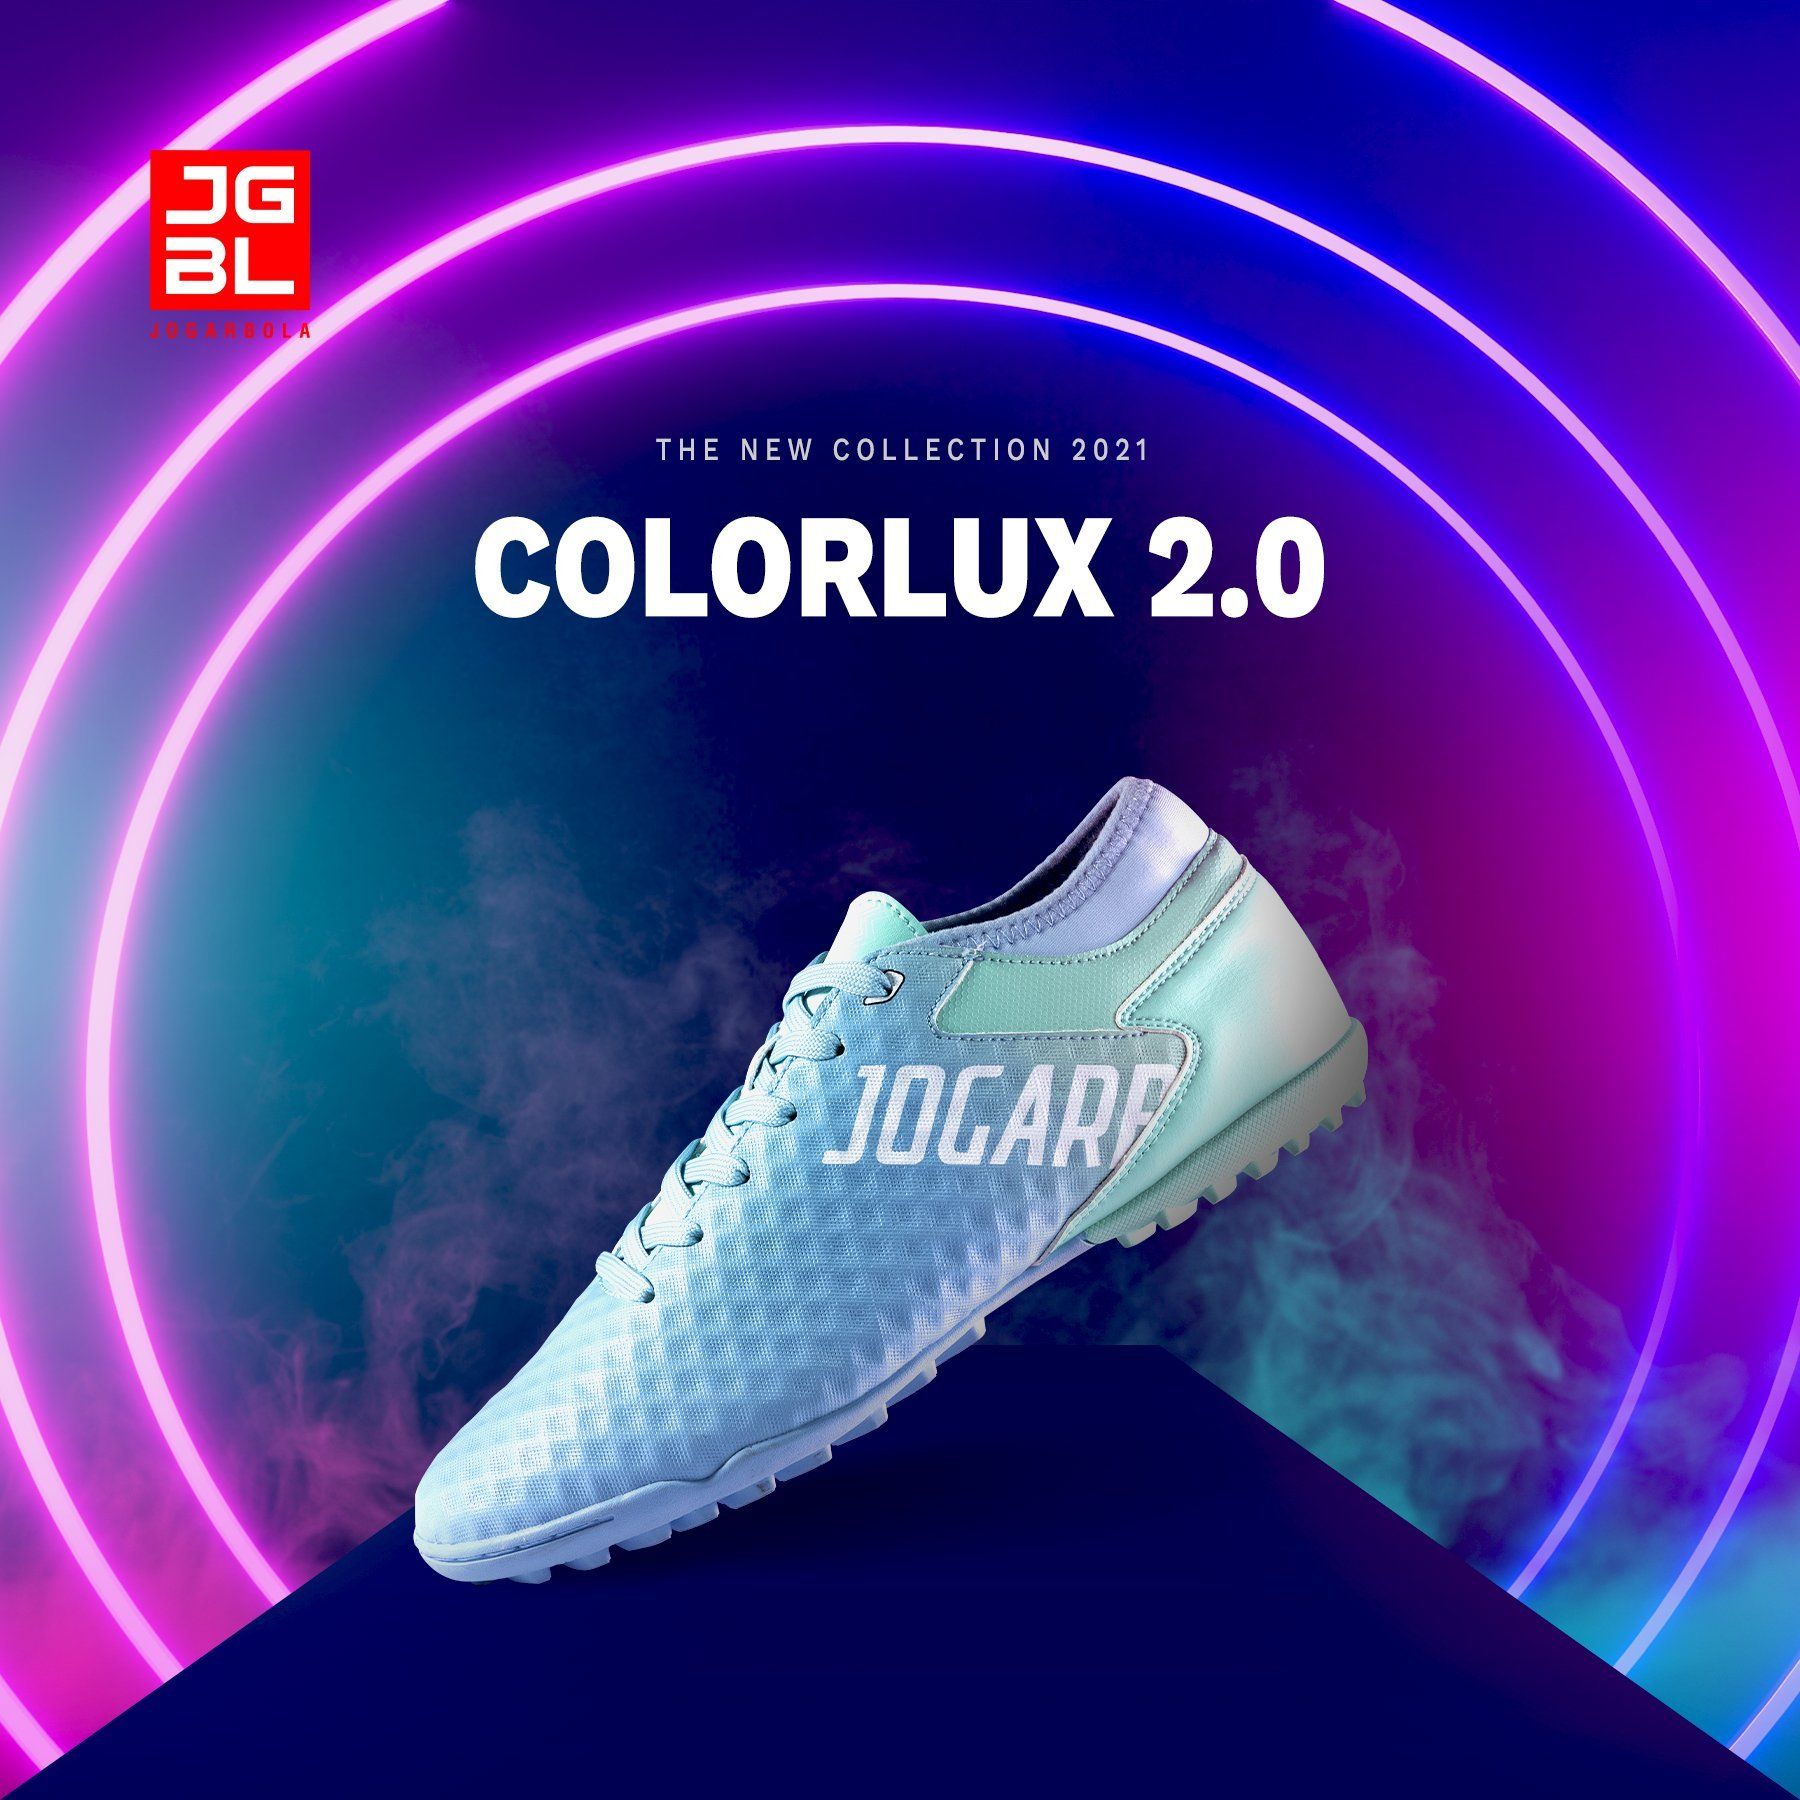  Giày đá bóng JOGARBOLA Colorlux 2.0 